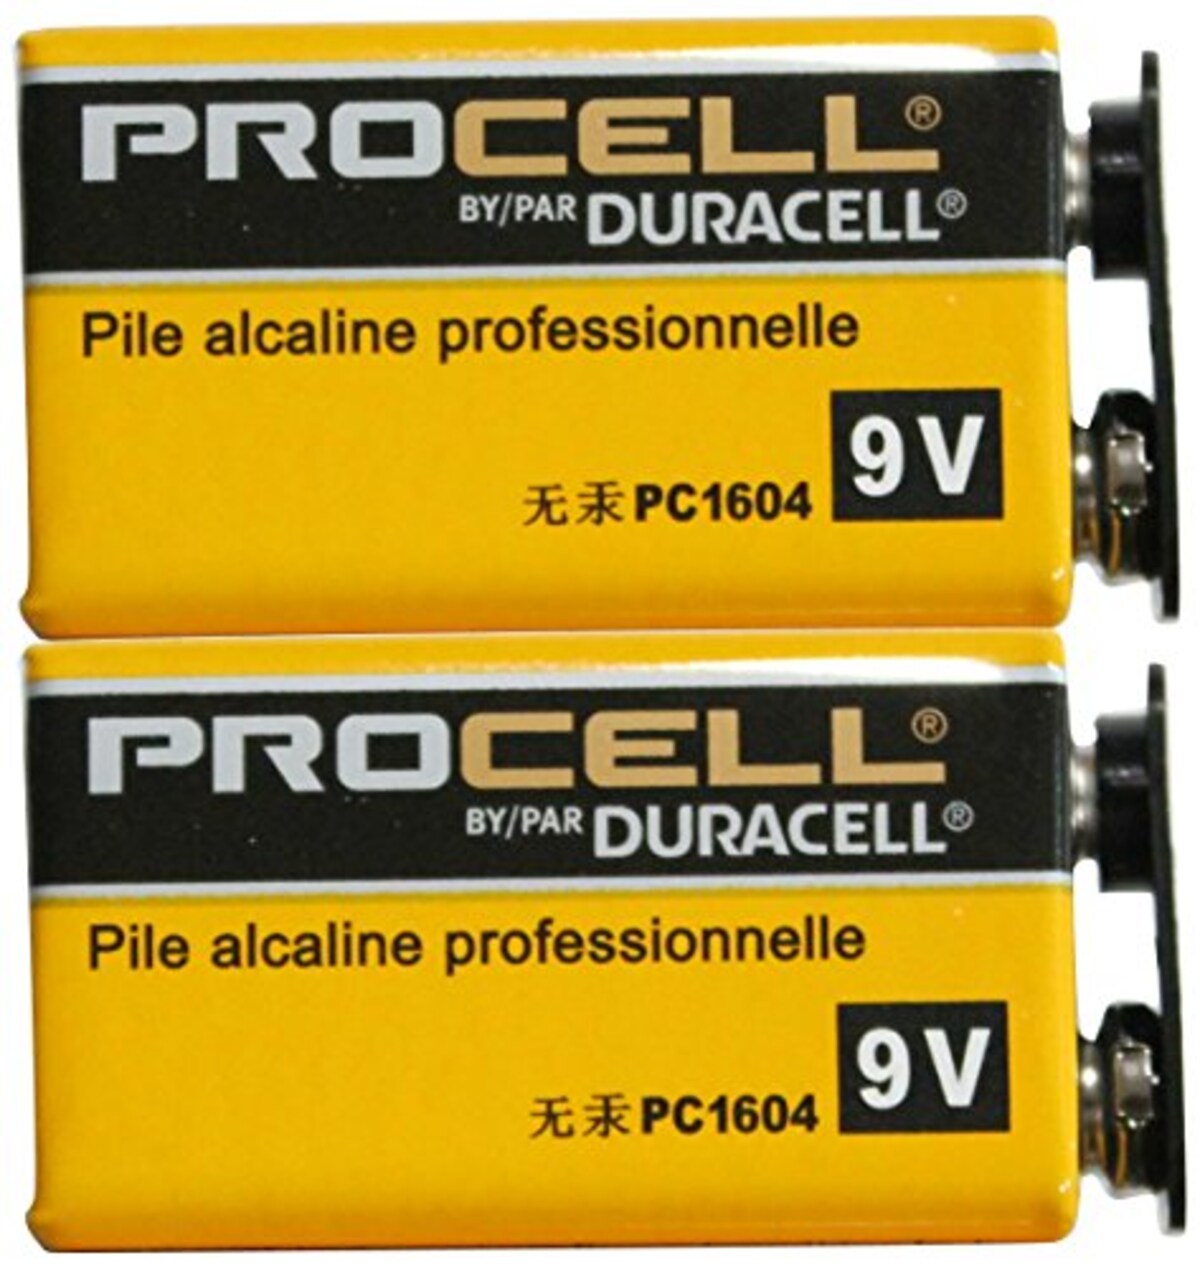 【DURACELL】PROCELL デュラセル プロセル 9V電池 エフェクター/楽器用アルカリ電池 2個セット DP-9V-2pcs